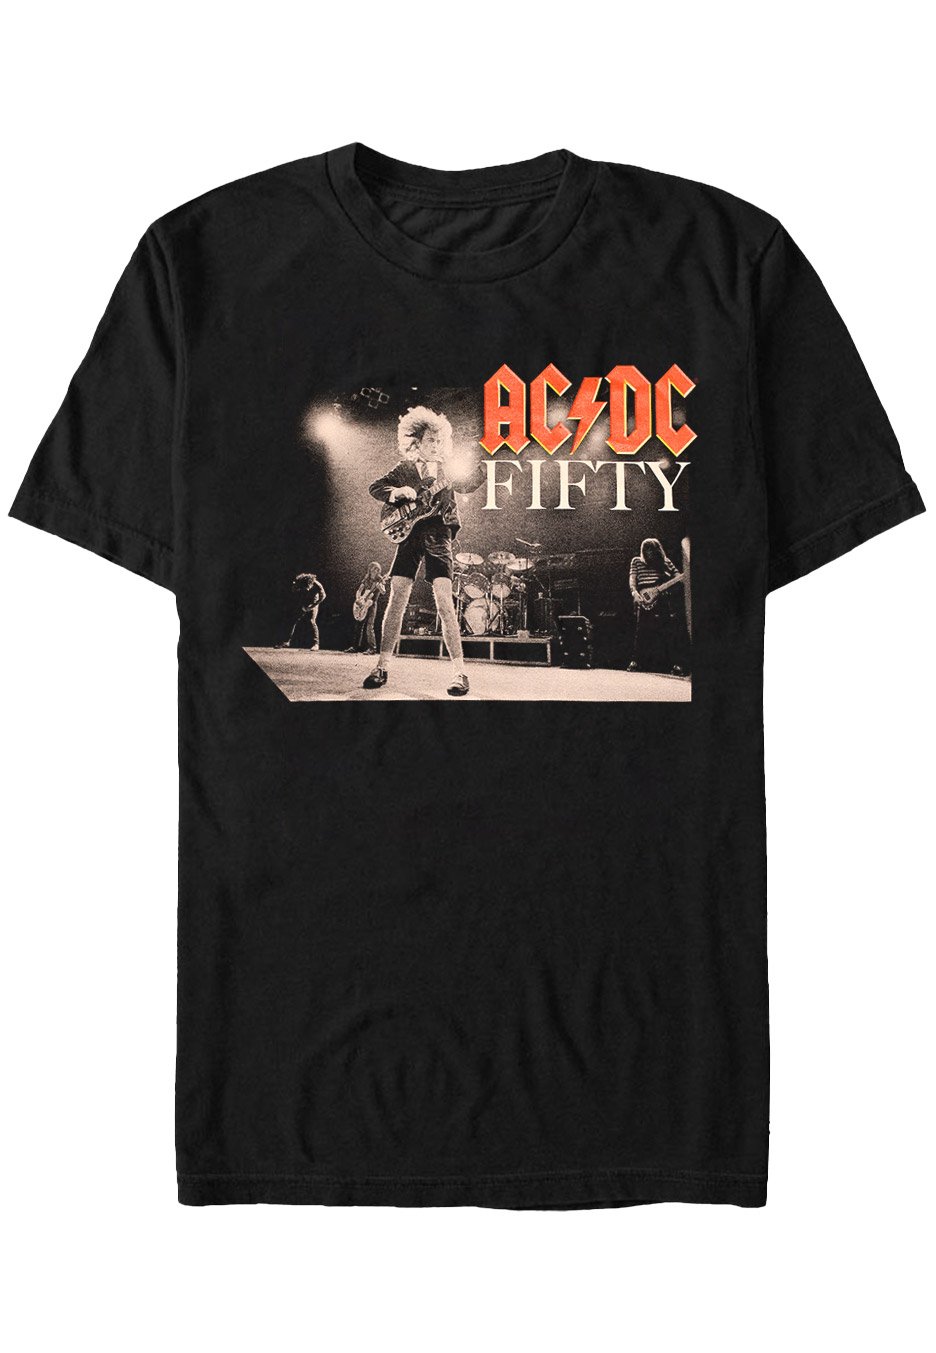 AC/DC - Fifty - T-Shirt